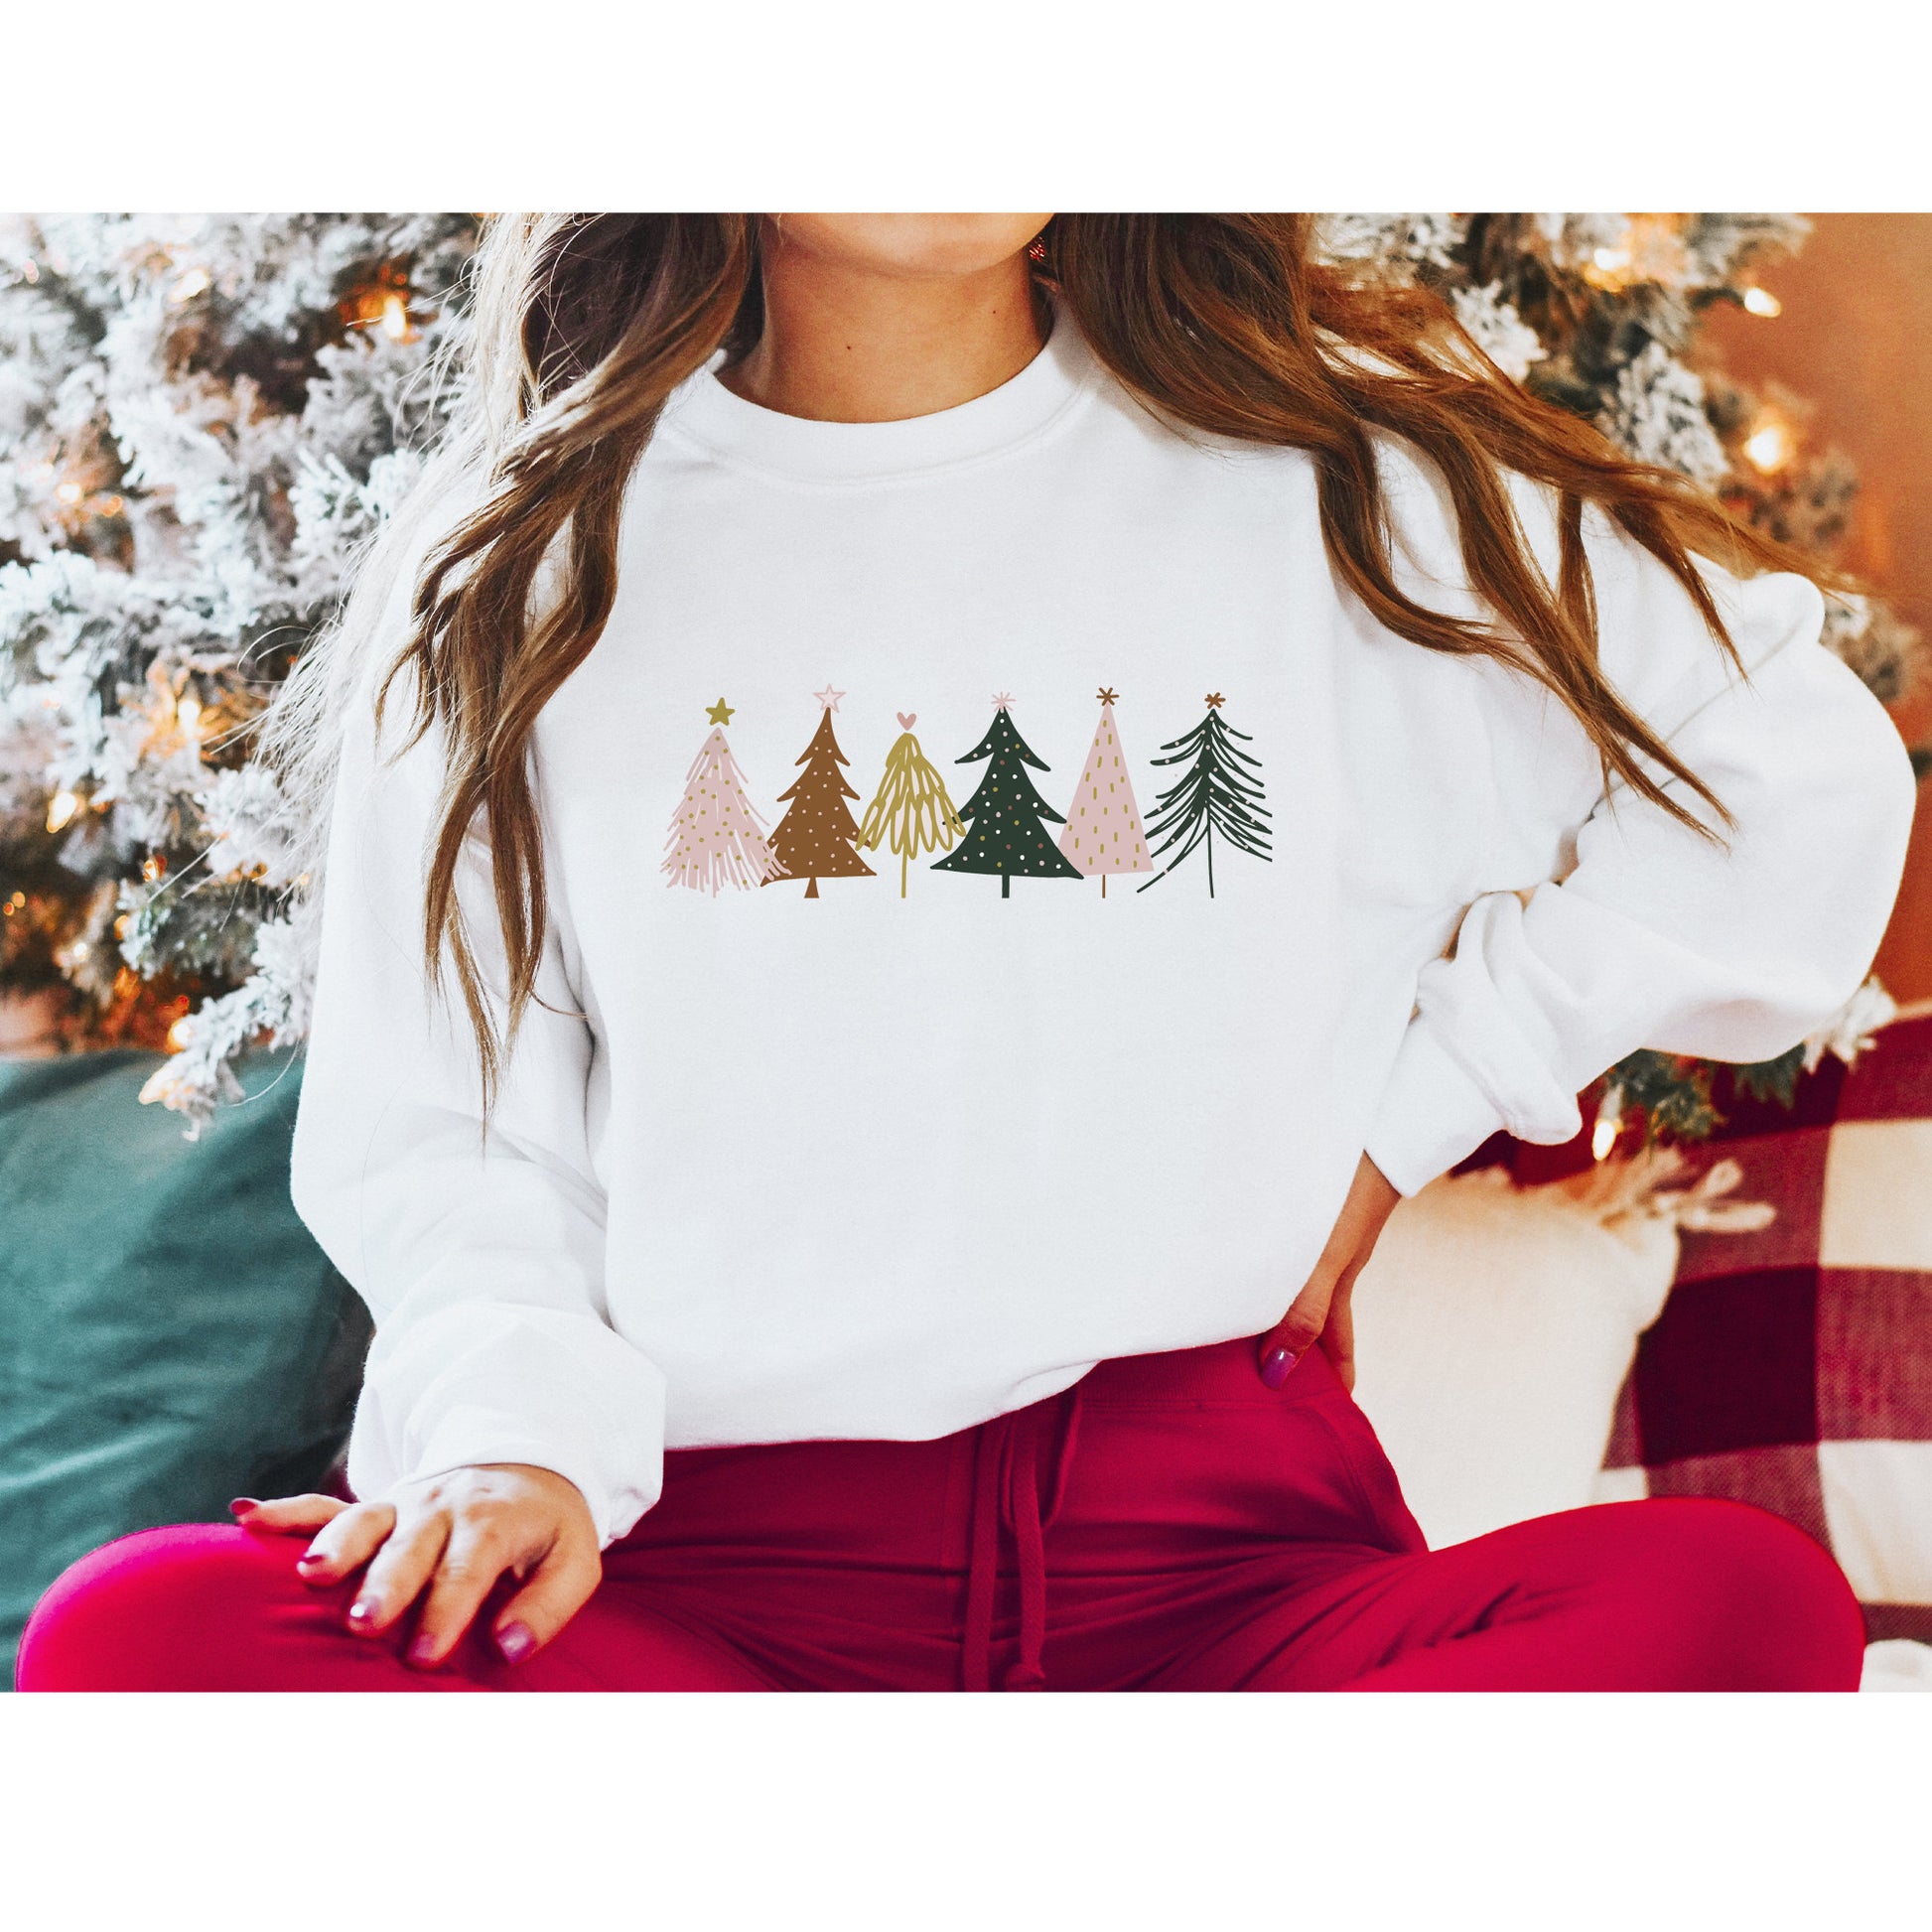 Boho Christmas Trees Sweatshirt, Christmas Sweatshirt, Christmas Shirt, Christmas Shirts For Women, Christmas Shirts, Holiday Sweatshirts